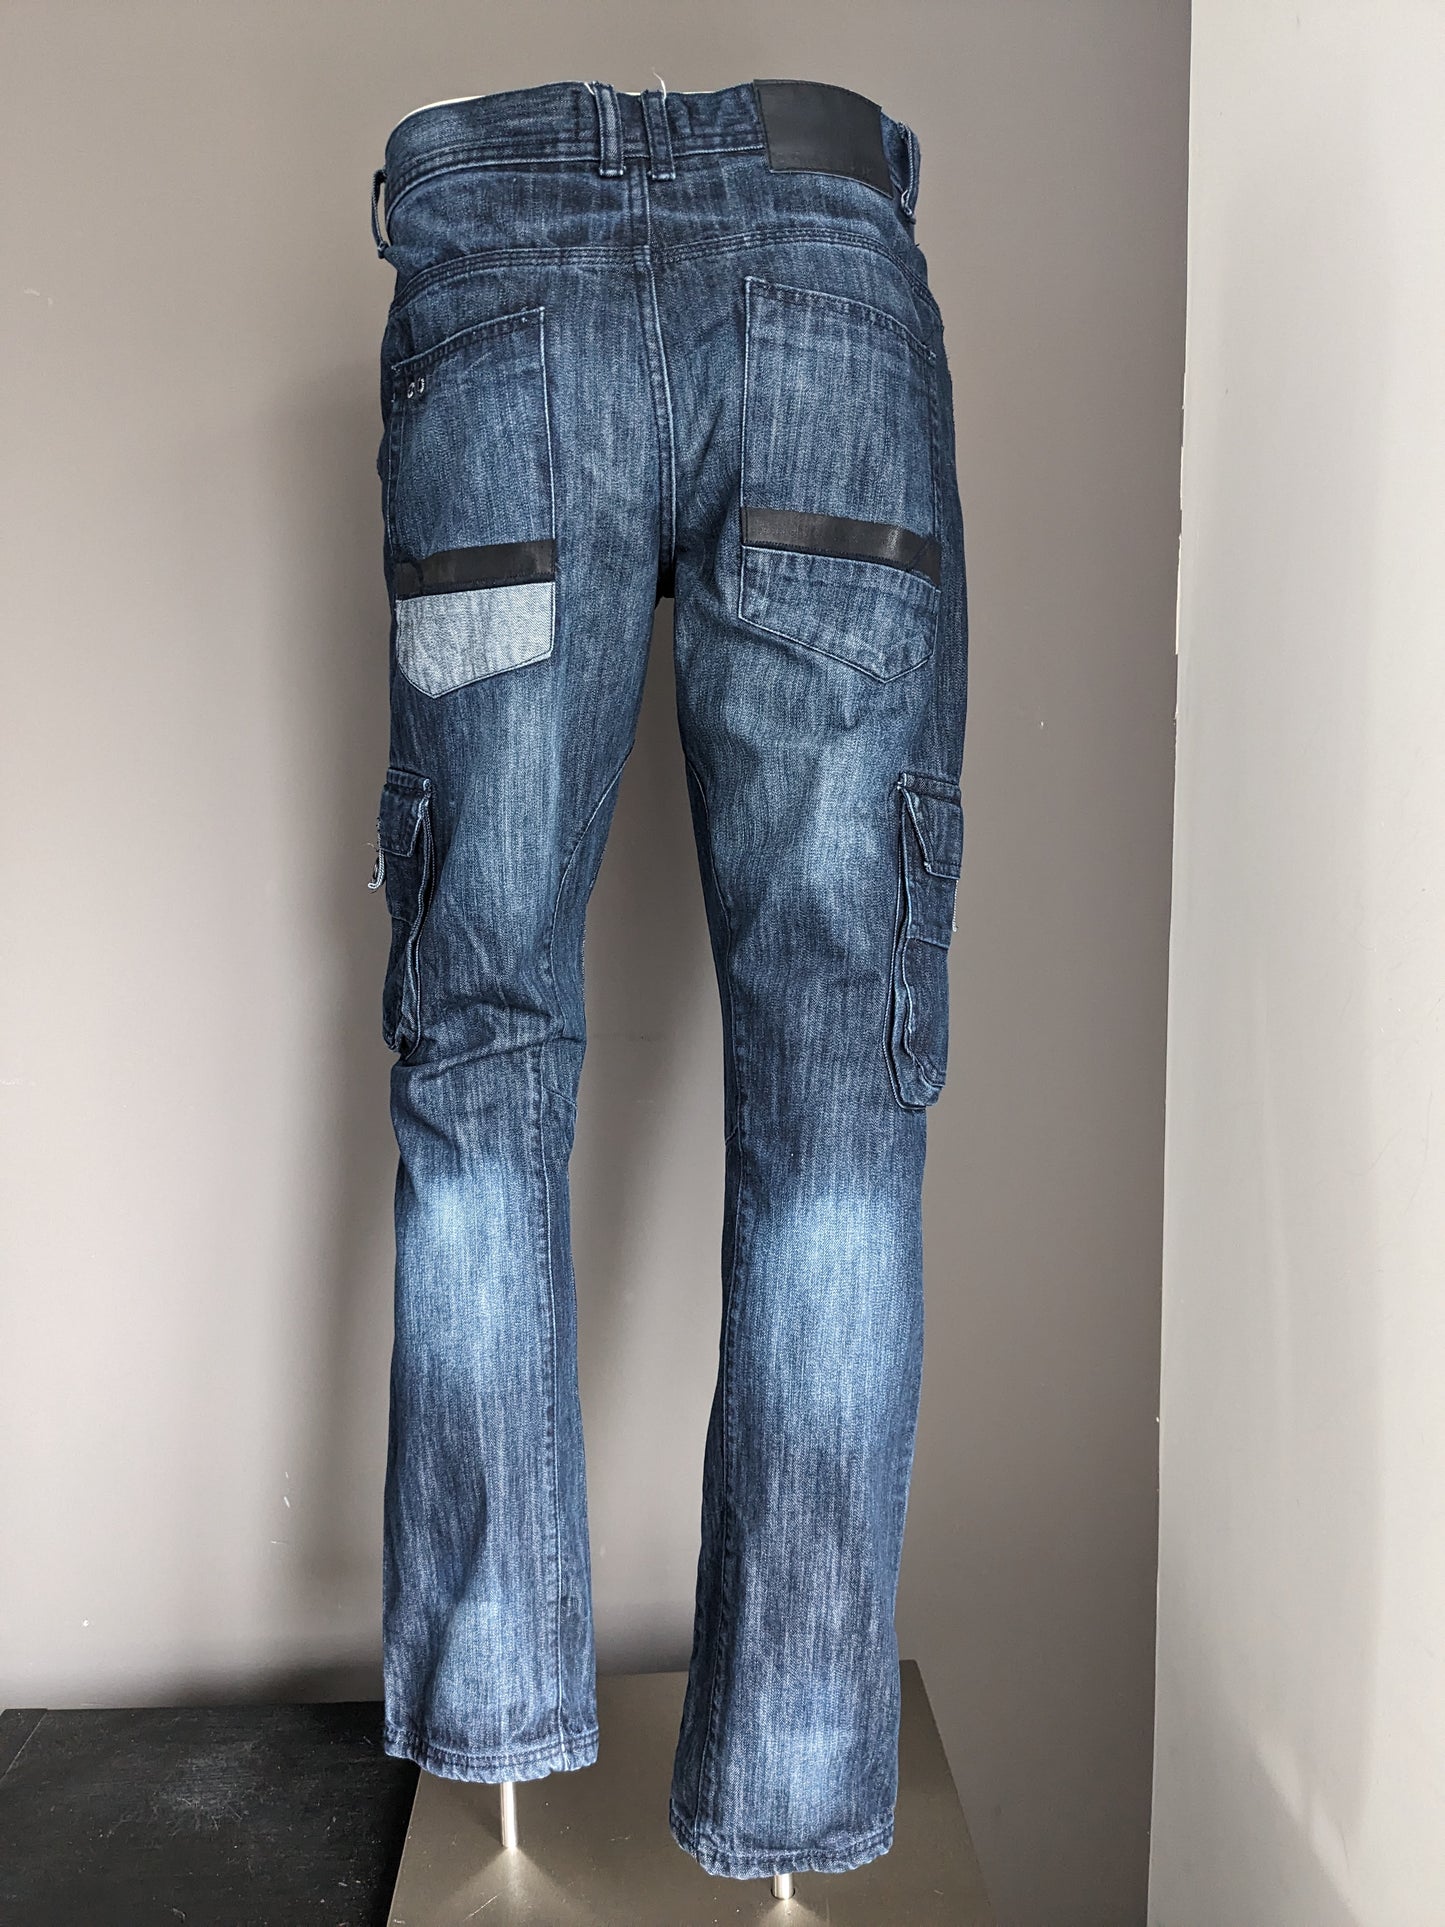 Jeans hechos. Color azul oscuro. Tamaño W32 - L34.